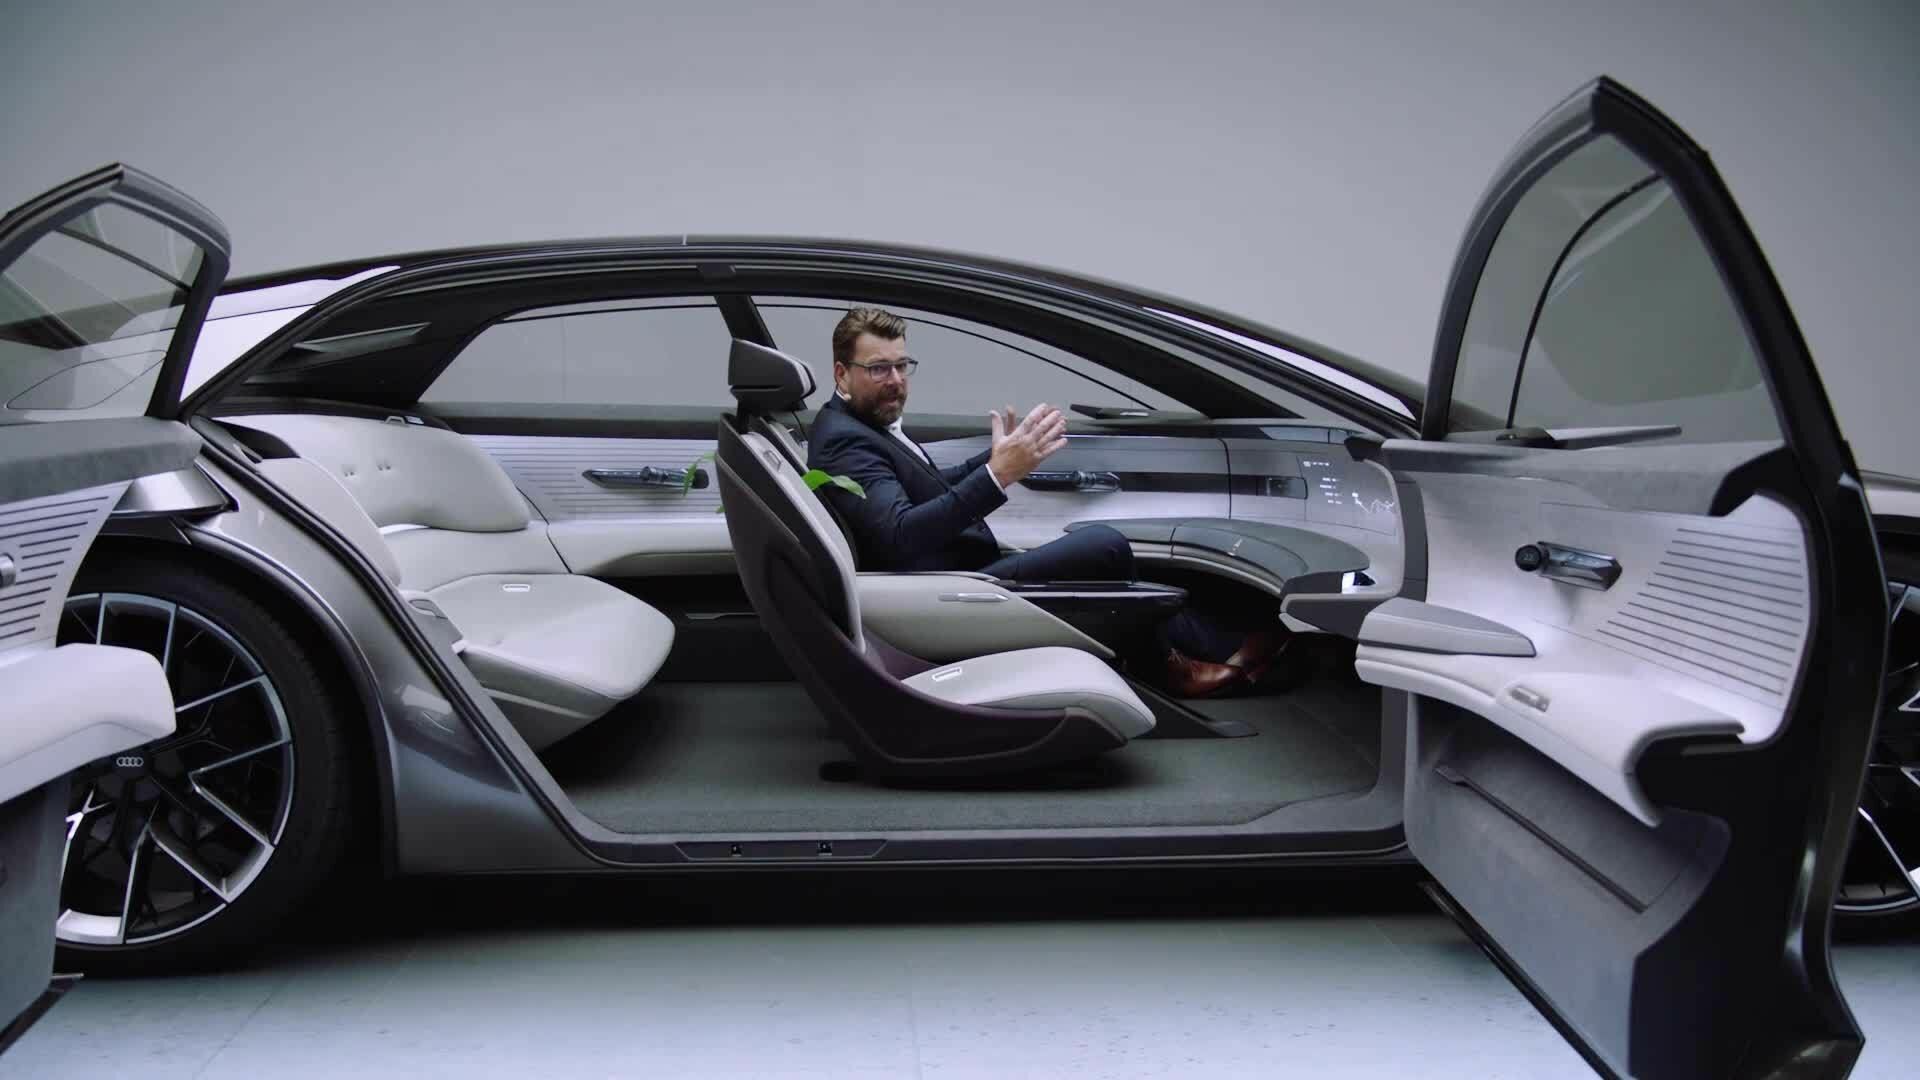 Oliver Hoffmann presents the Audi grandsphere concept